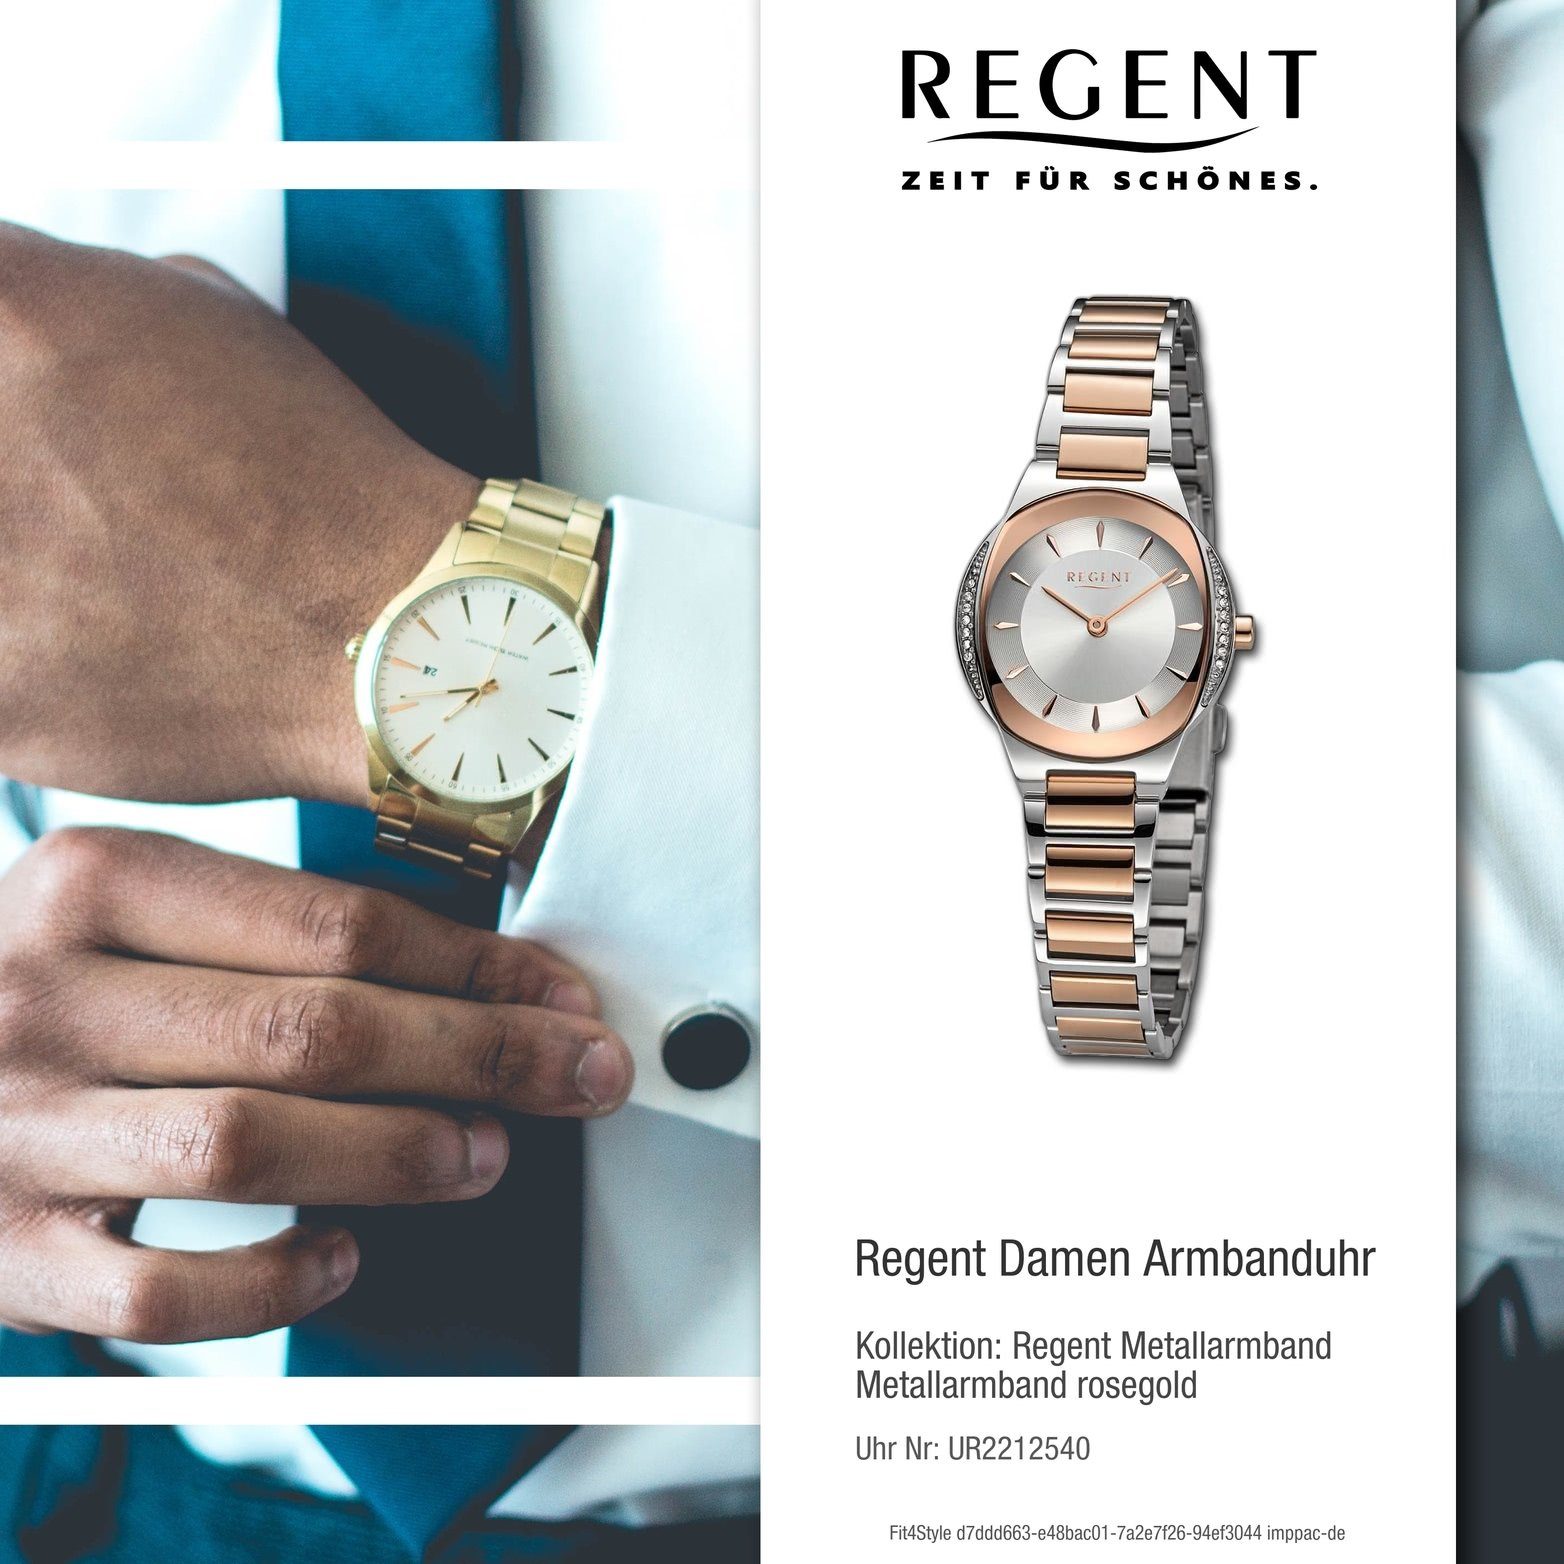 Metallarmband groß Quarzuhr Gehäuse, silber, Armbanduhr rundes Regent rosegold, Damen Regent Analog, (28,5mm) Damenuhr